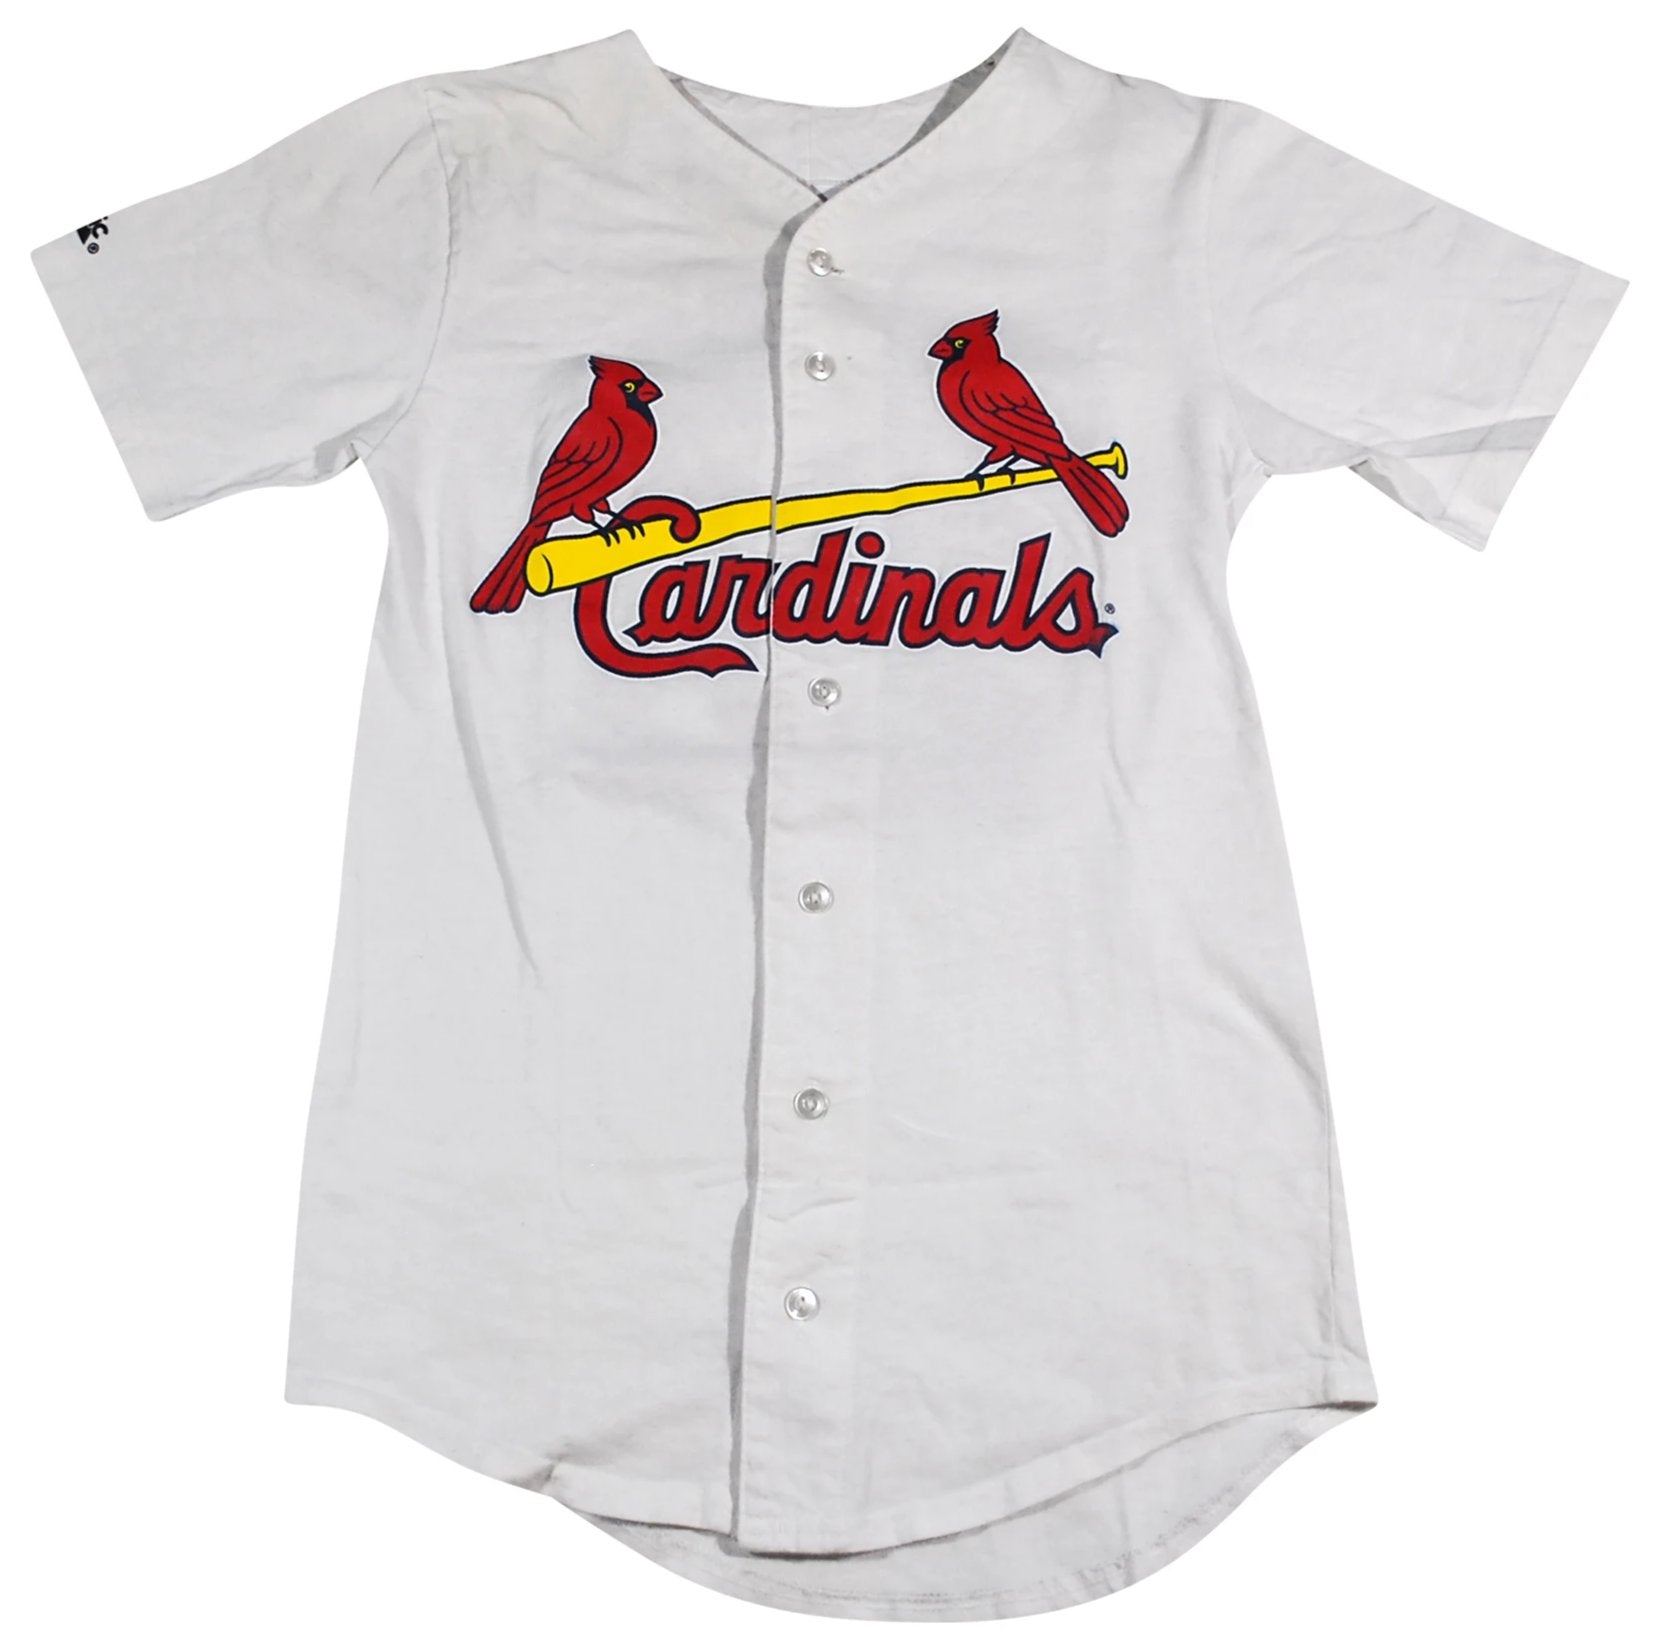 Cardinals jersey collection